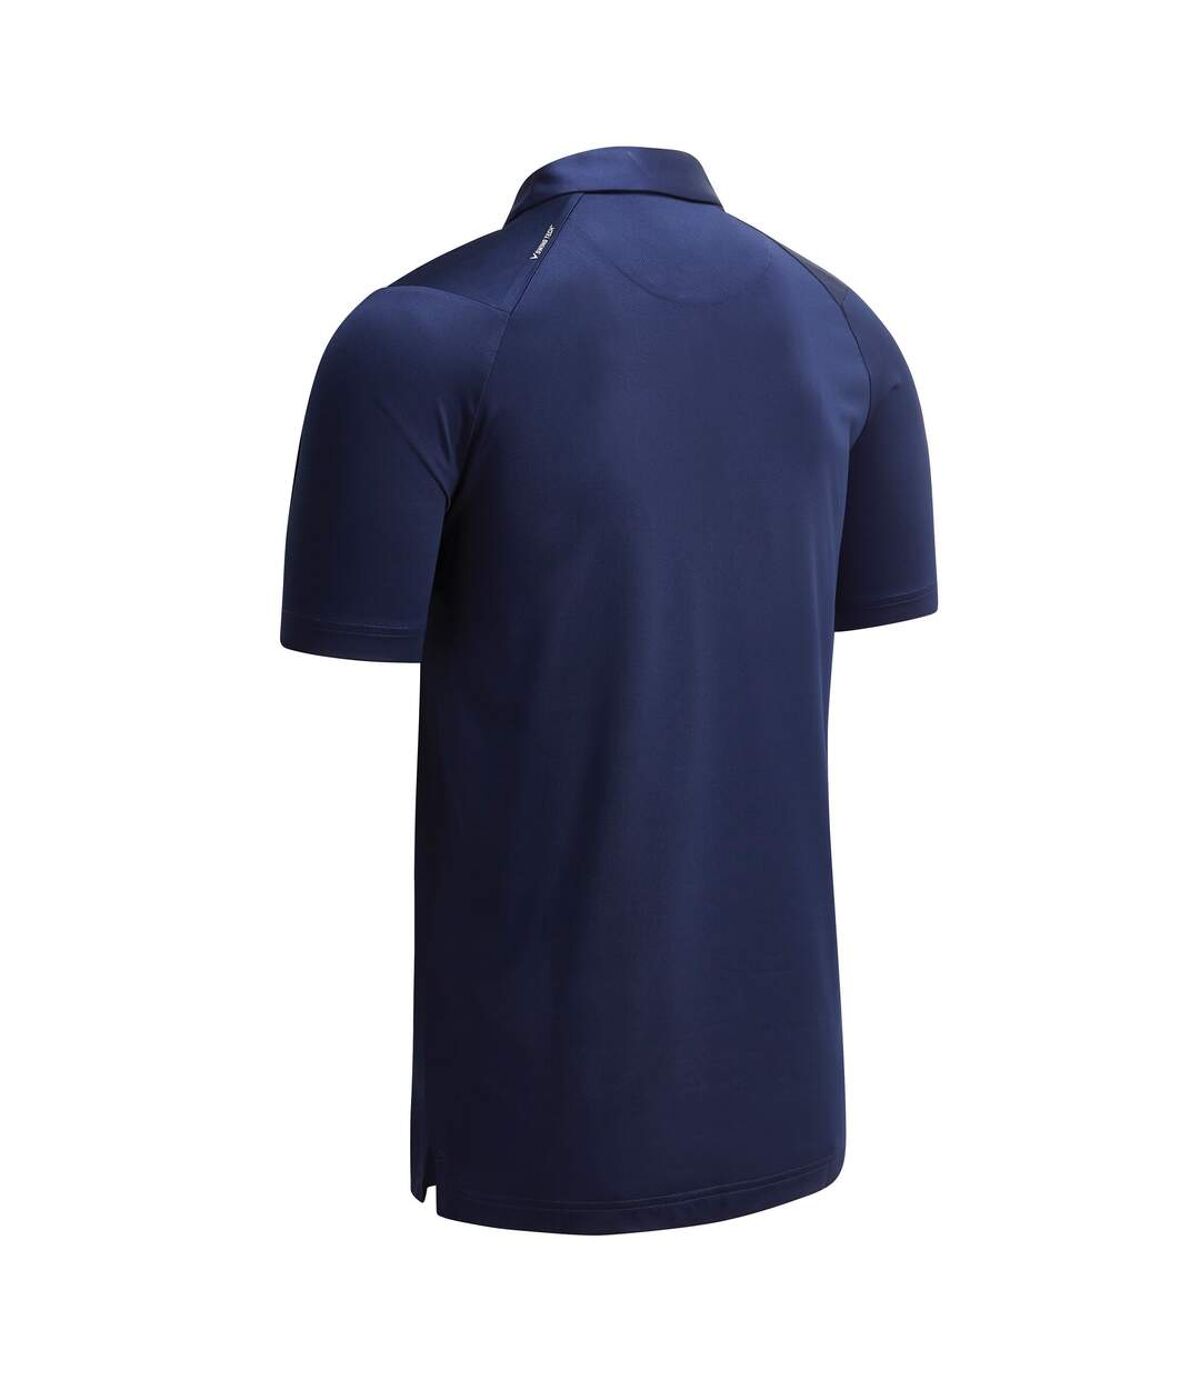 Callaway Mens Swing Tech Solid Colour Polo Shirt (Peacoat Navy) - UTRW7679